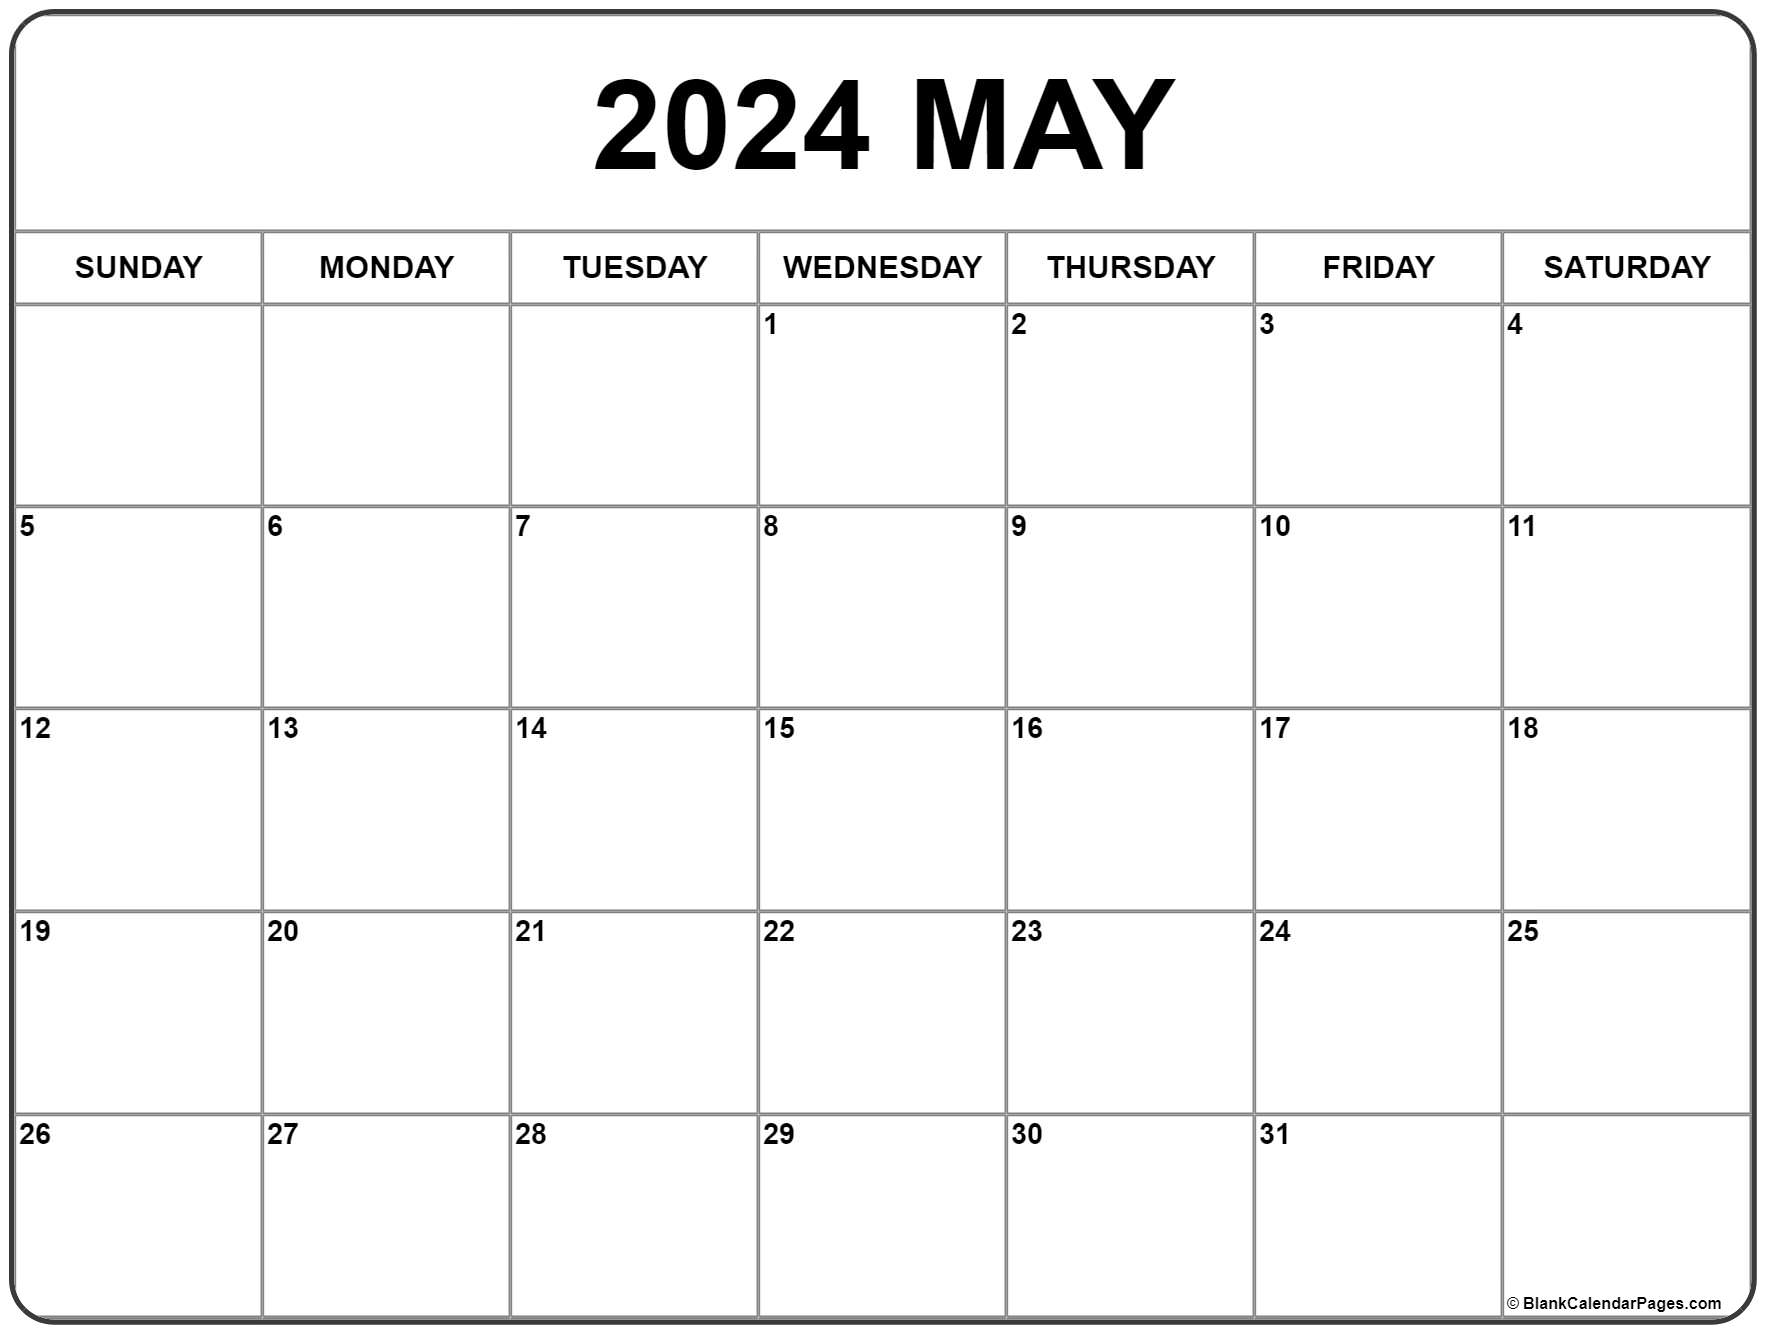 Blank Monthly Calendar 2021 May 2021 calendar | free printable monthly calendars